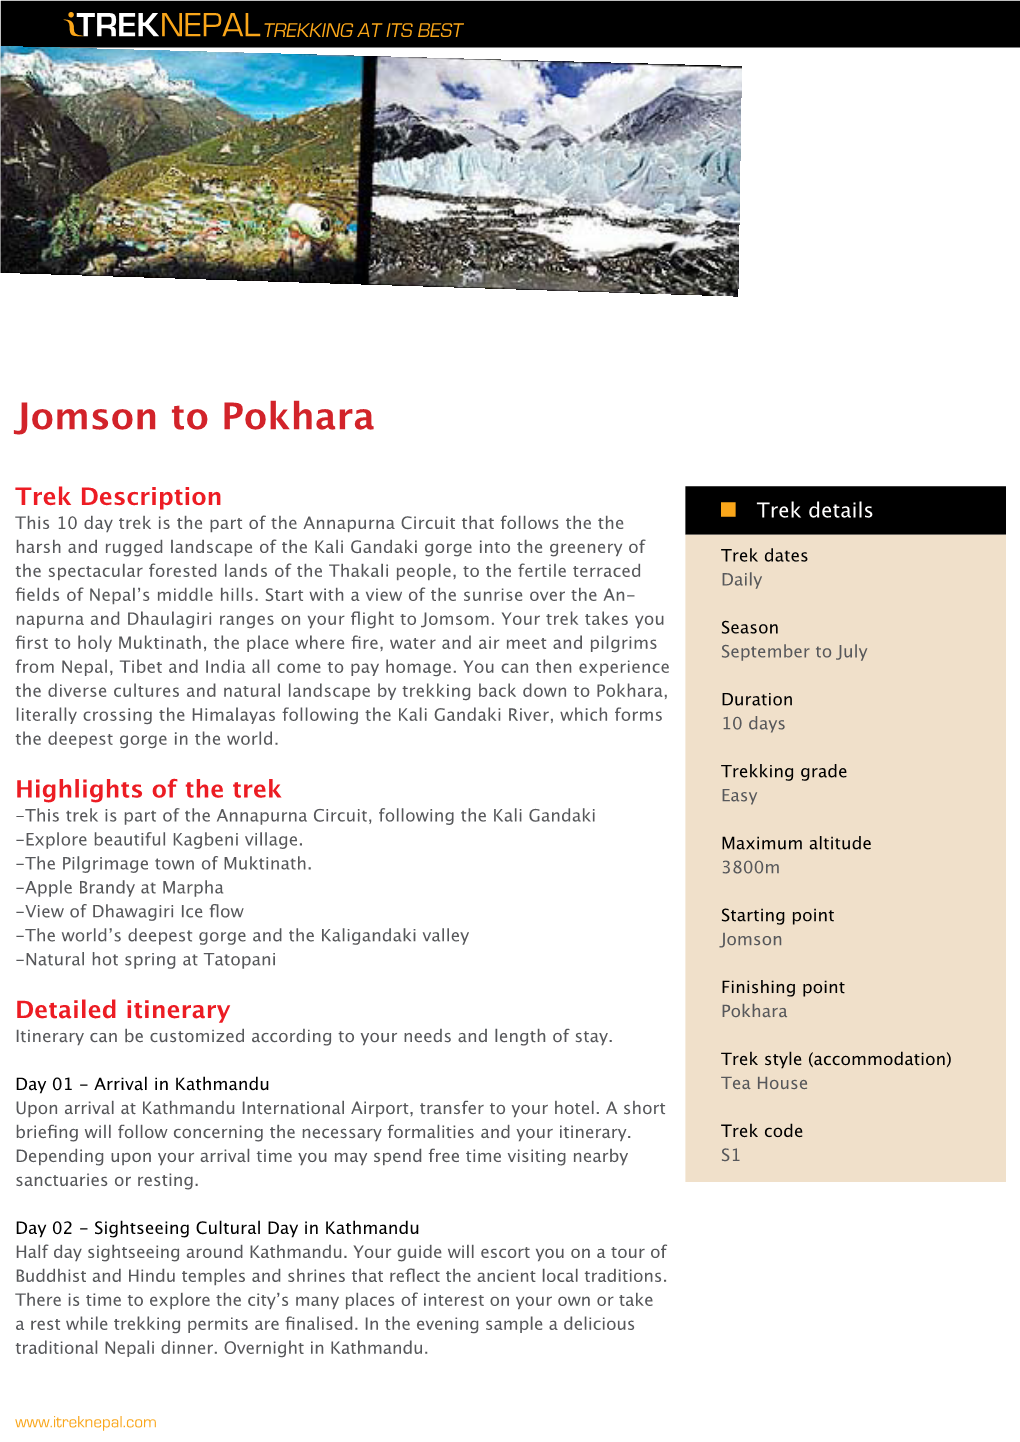 Jomson to Pokhara